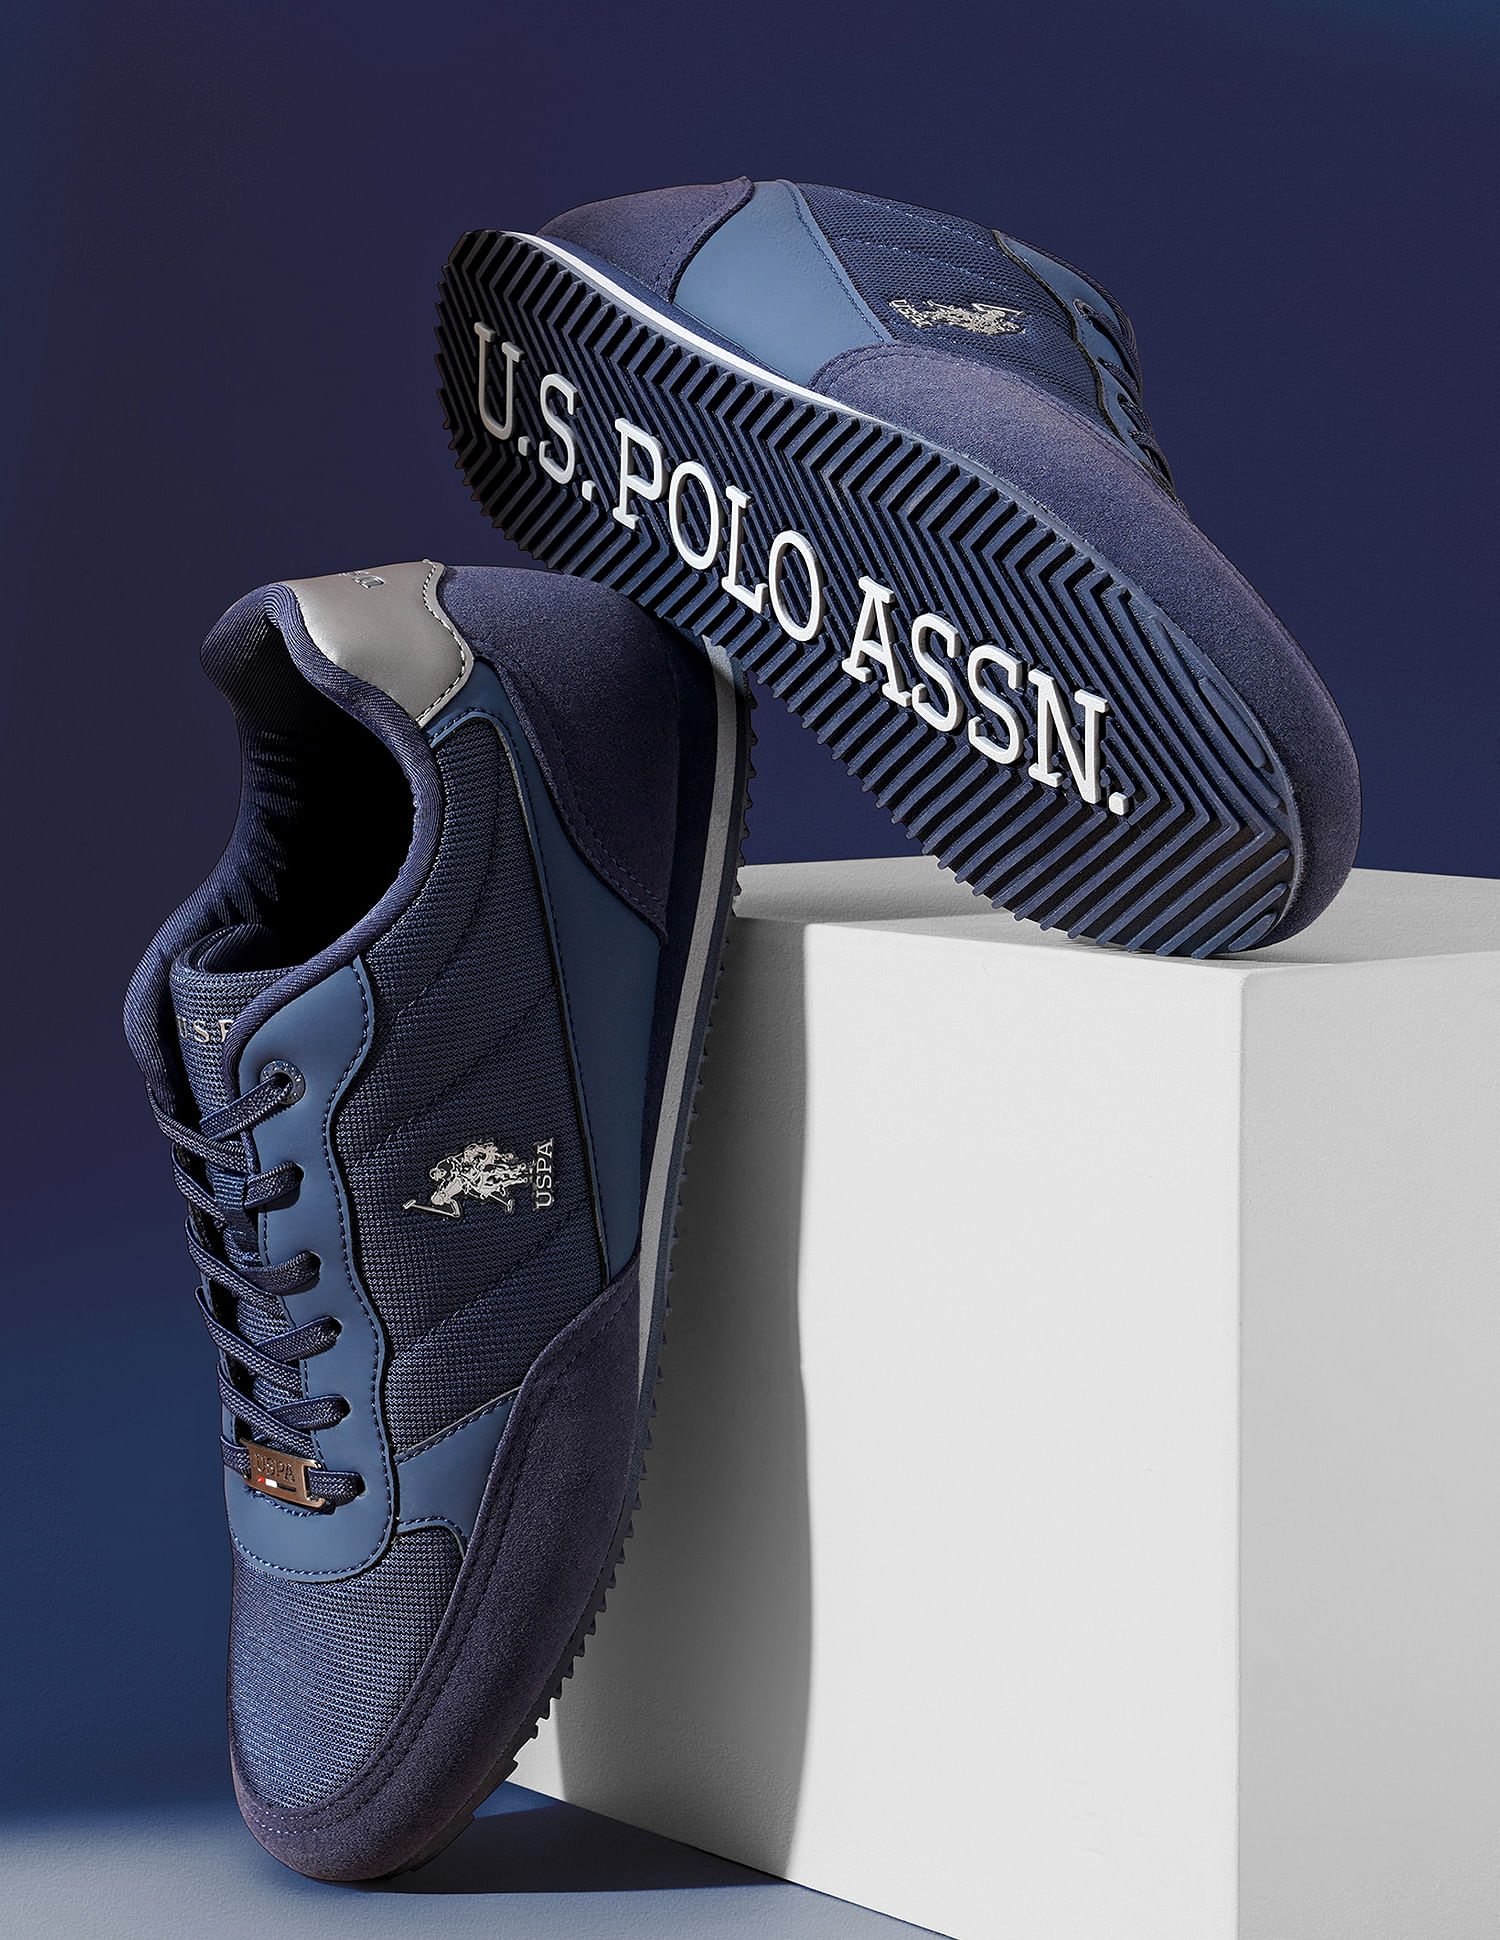 US Polo Assn Women's Shoes All Trek Comfort Foam Insole Gray Athletic Size  7 M | eBay